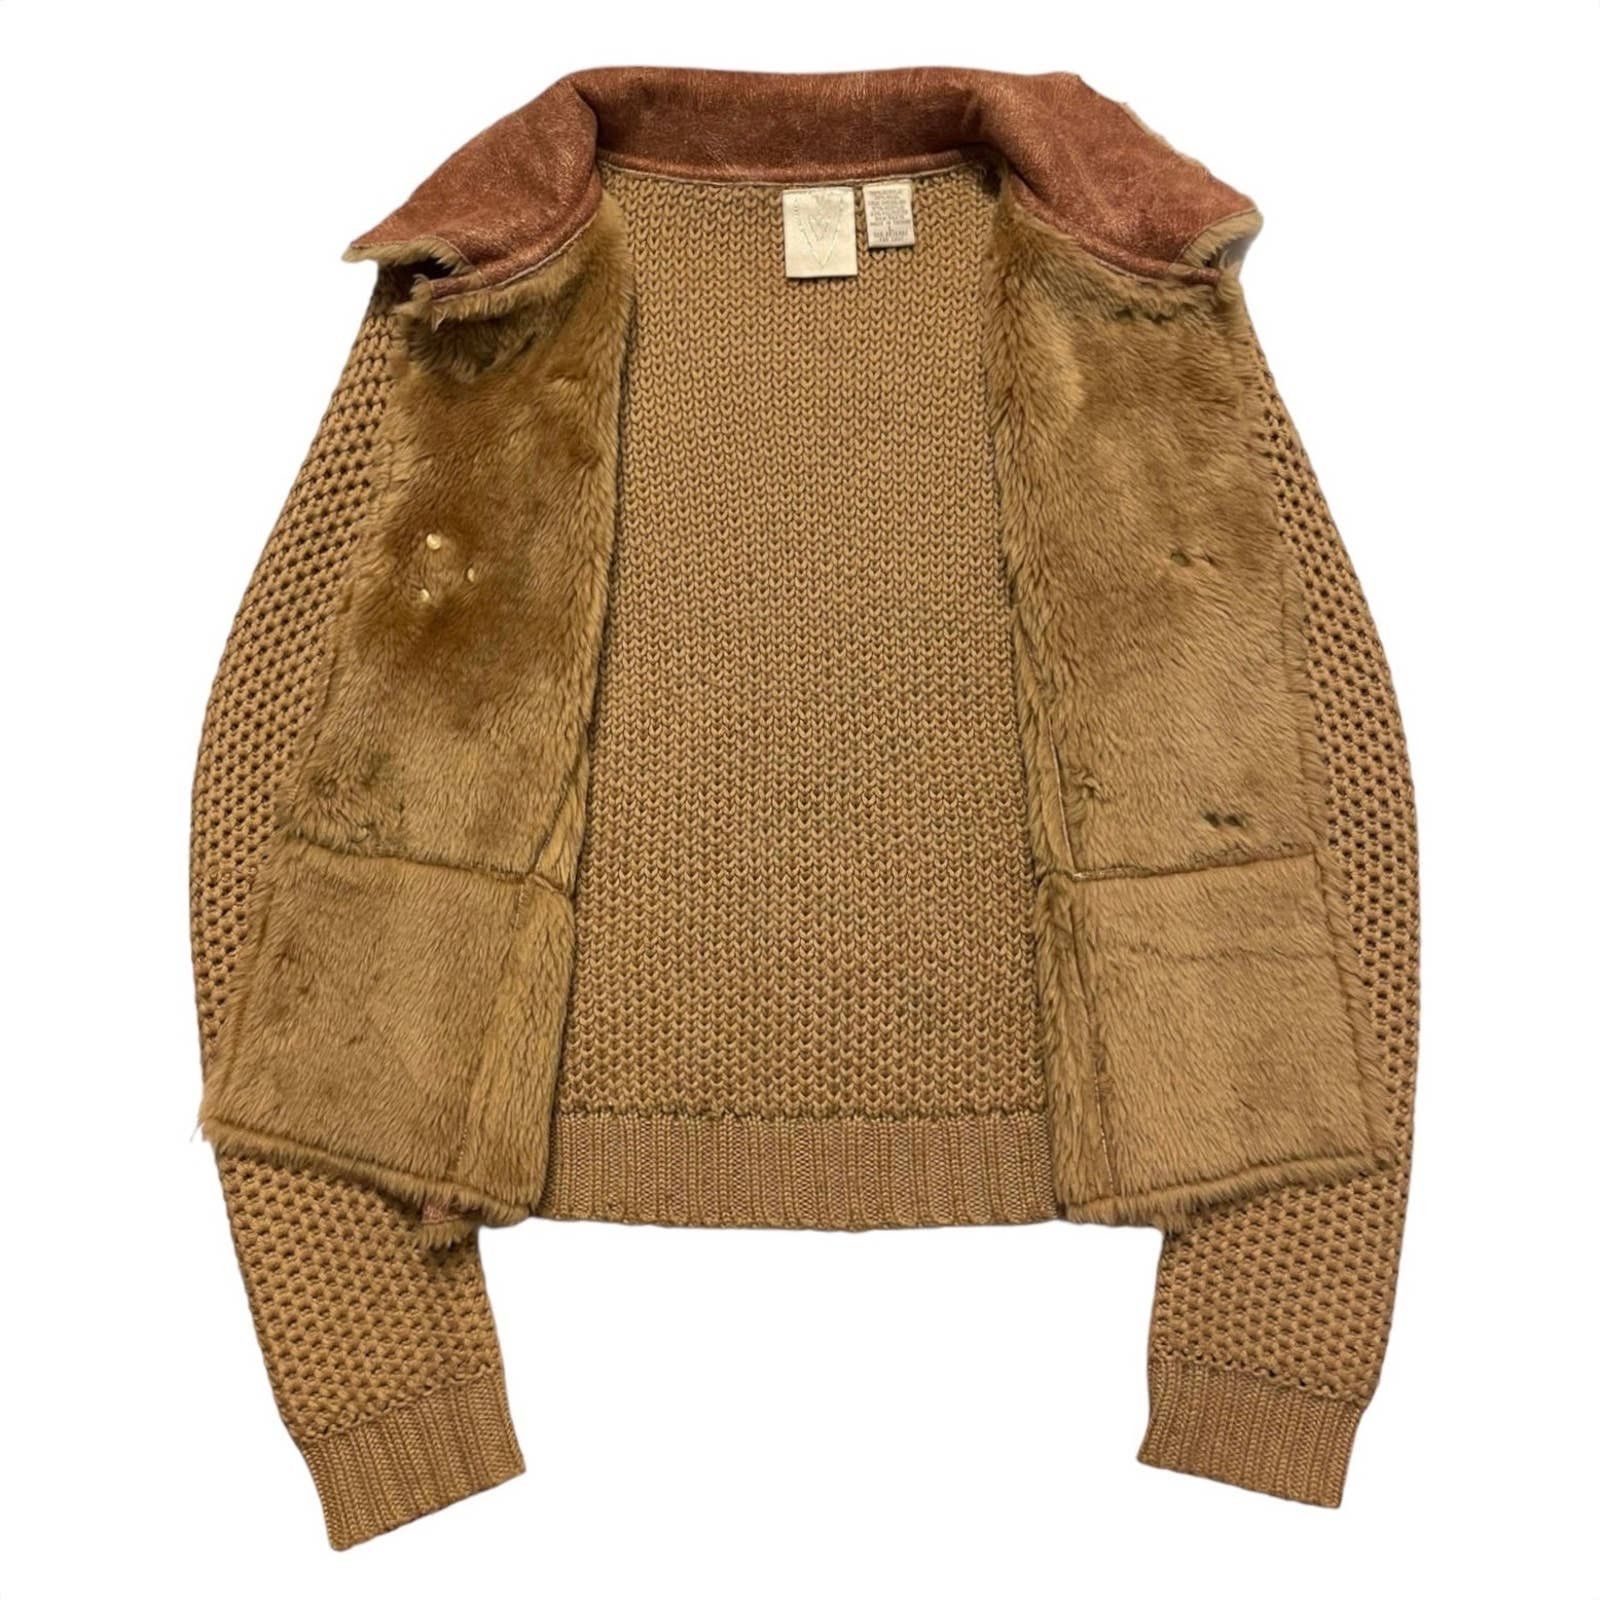 Vintage Vintage Y2K grunge faux shearling knit sweater jacket Size L Size L / US 10 / IT 46 - 5 Thumbnail